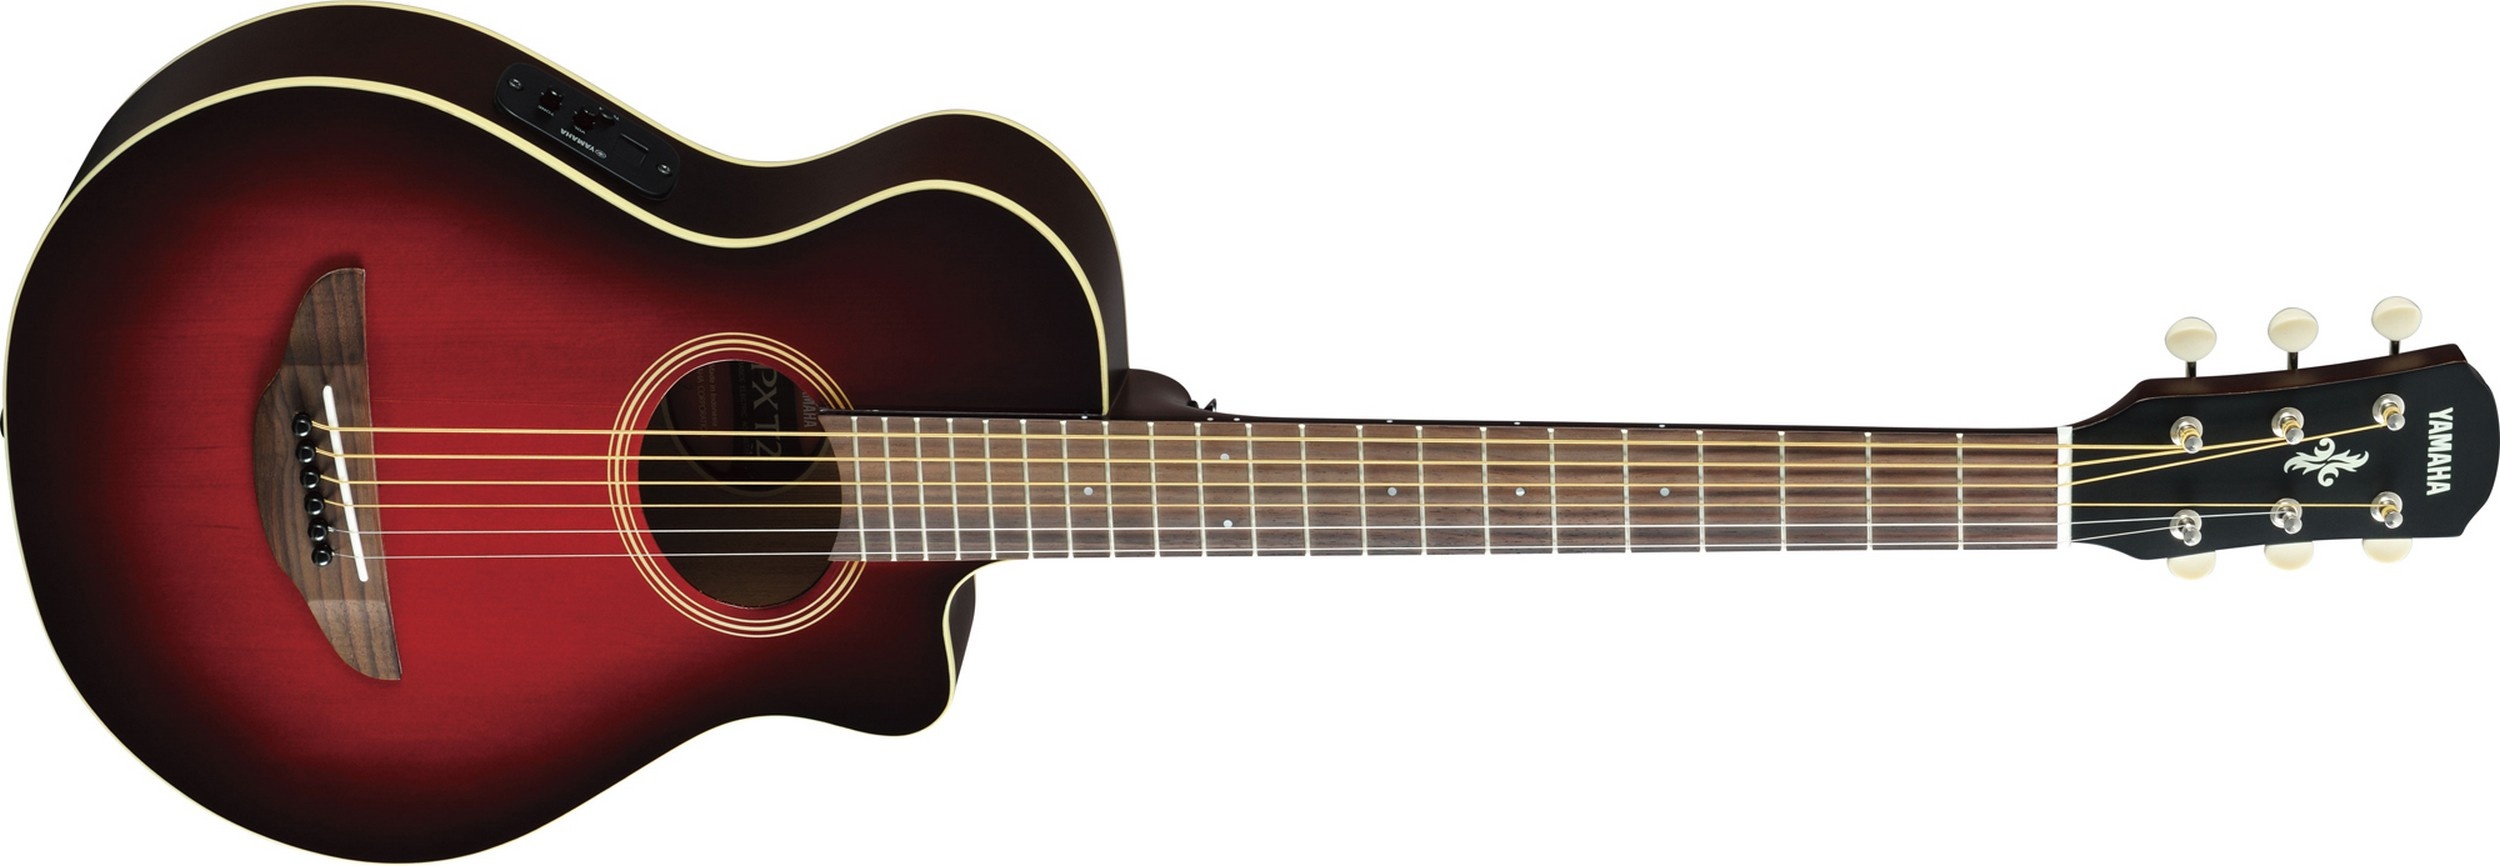 Yamaha Apxt2 - Dark Red Burst - Travel acoustic guitar - Variation 1